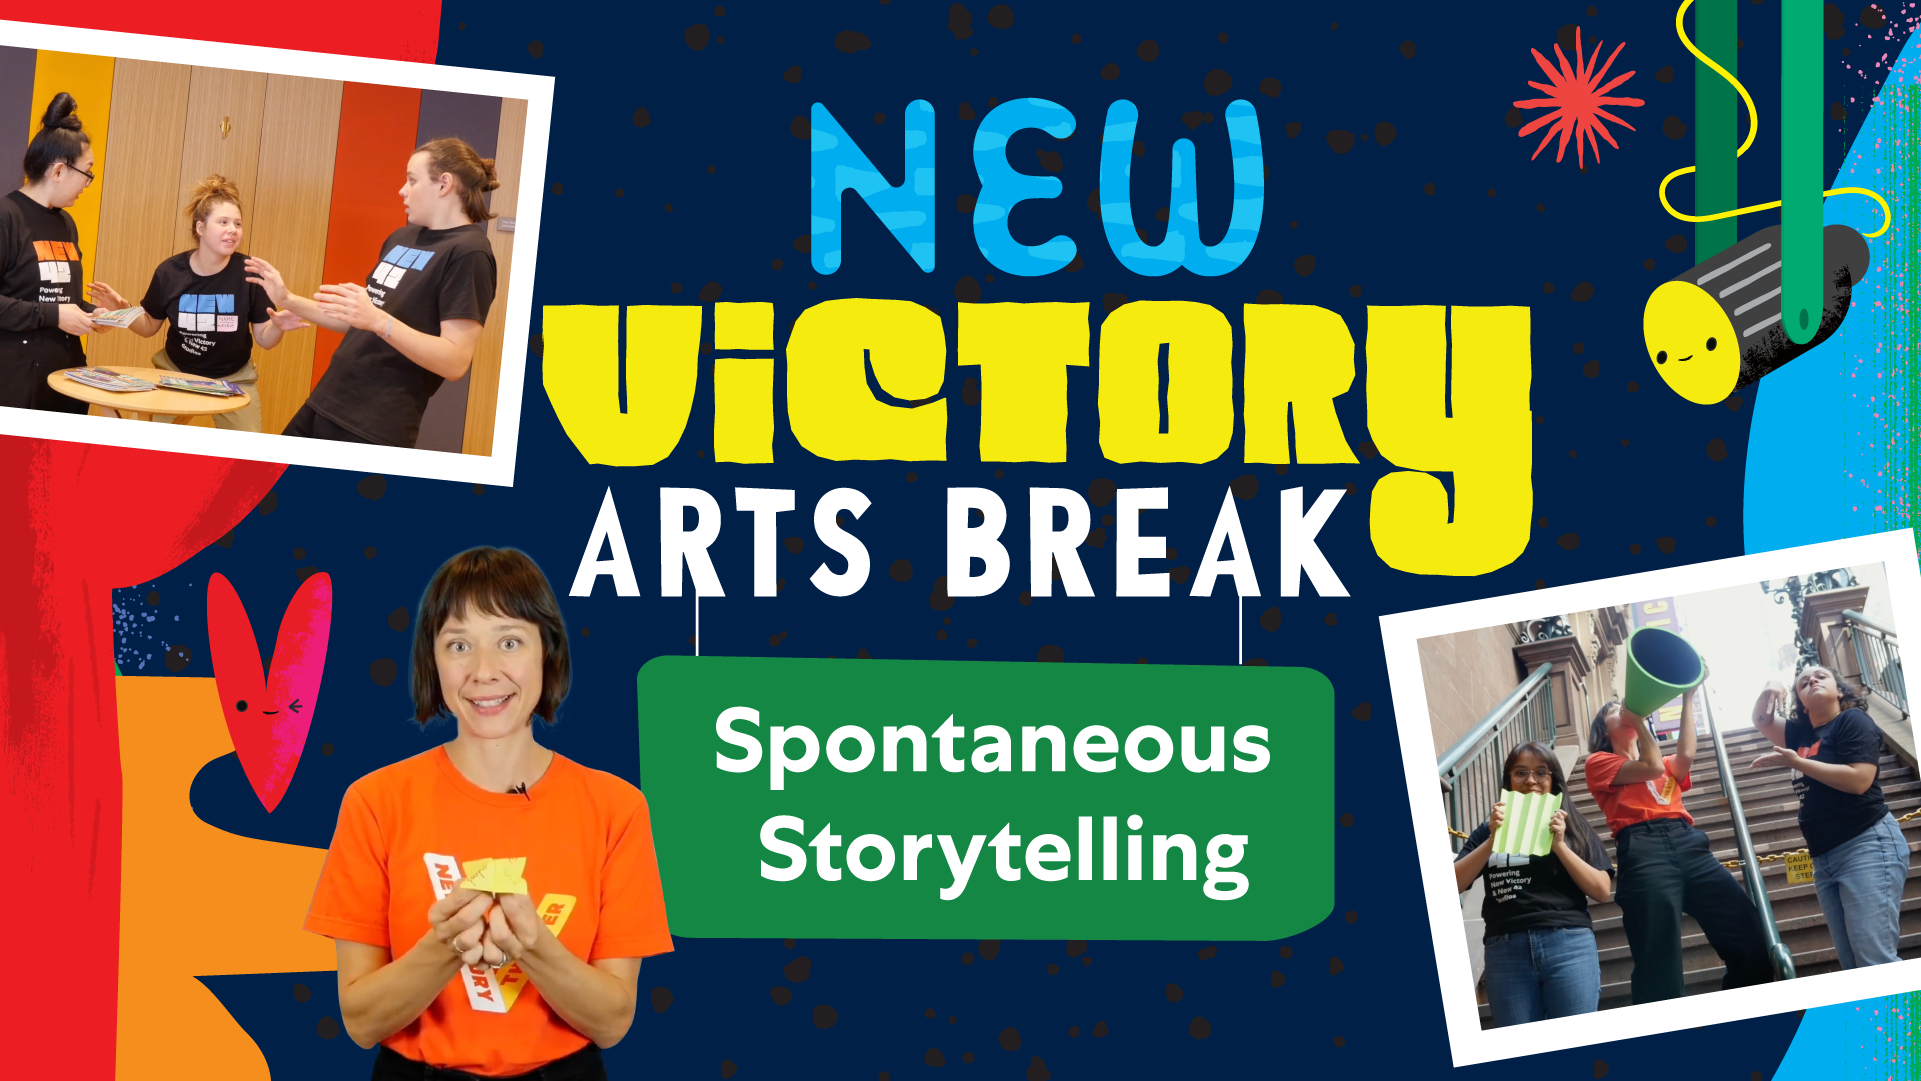 New Victory Arts Break: Spontaneous Storytelling